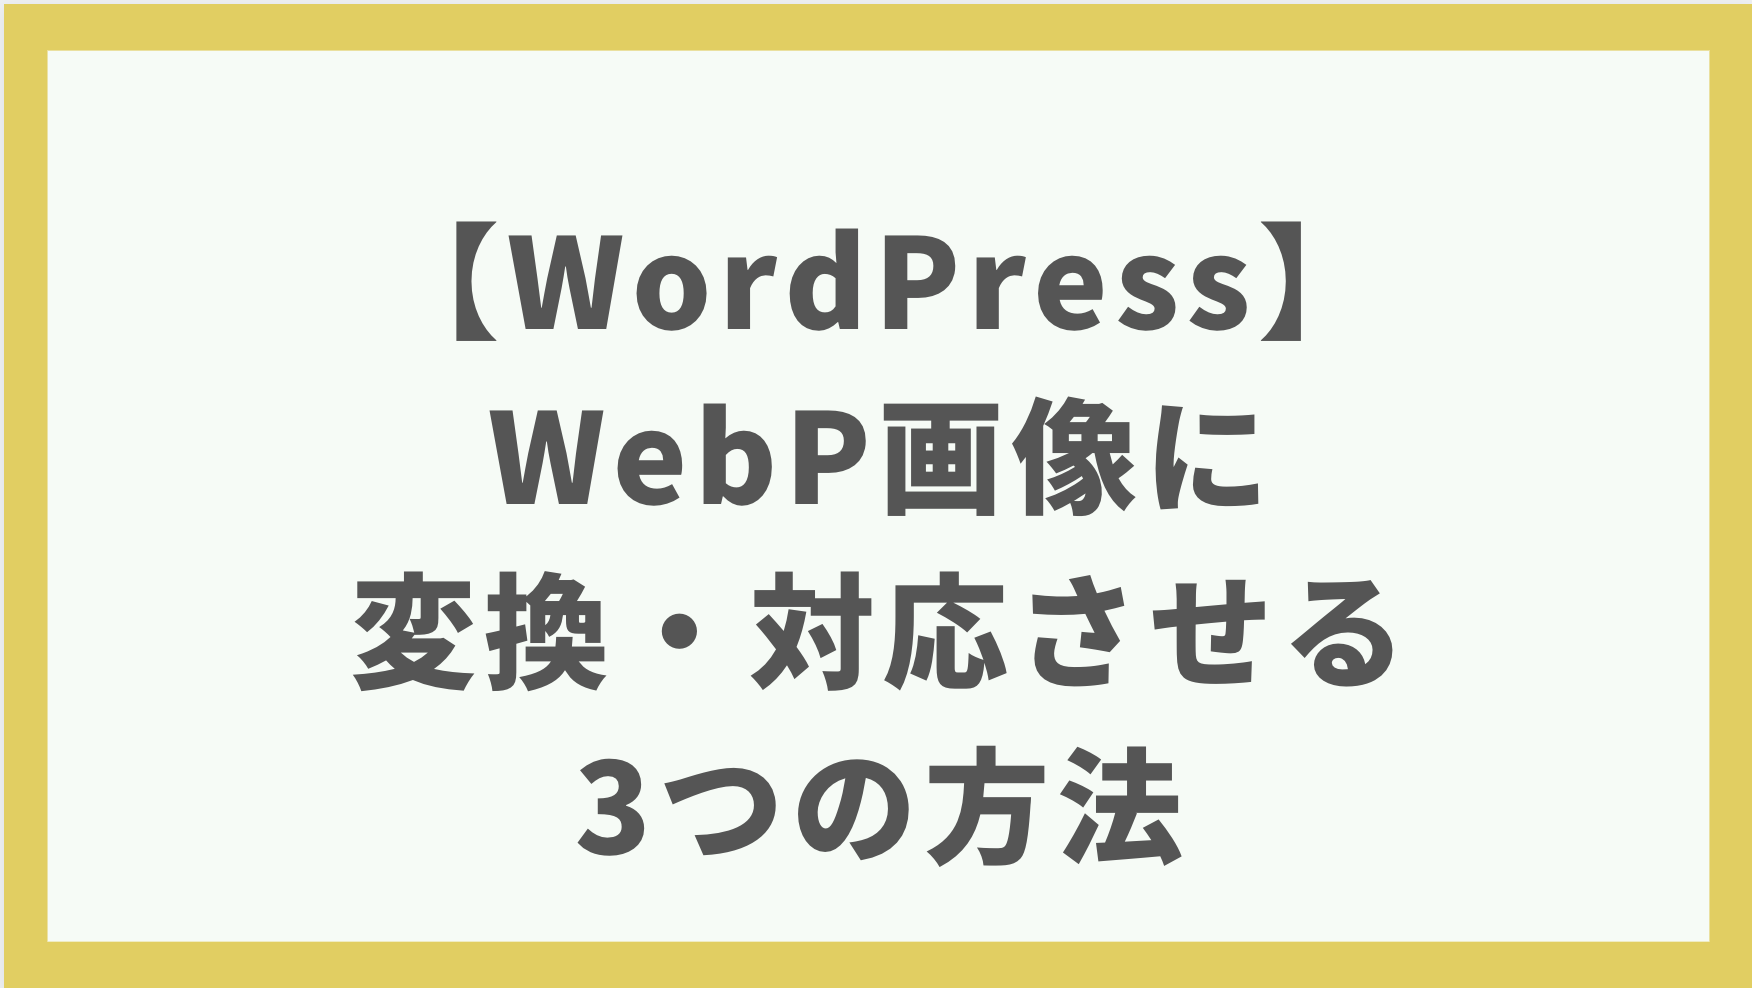 WordPressでWebP画像に変換・対応させる3つの方法【WebP画像】